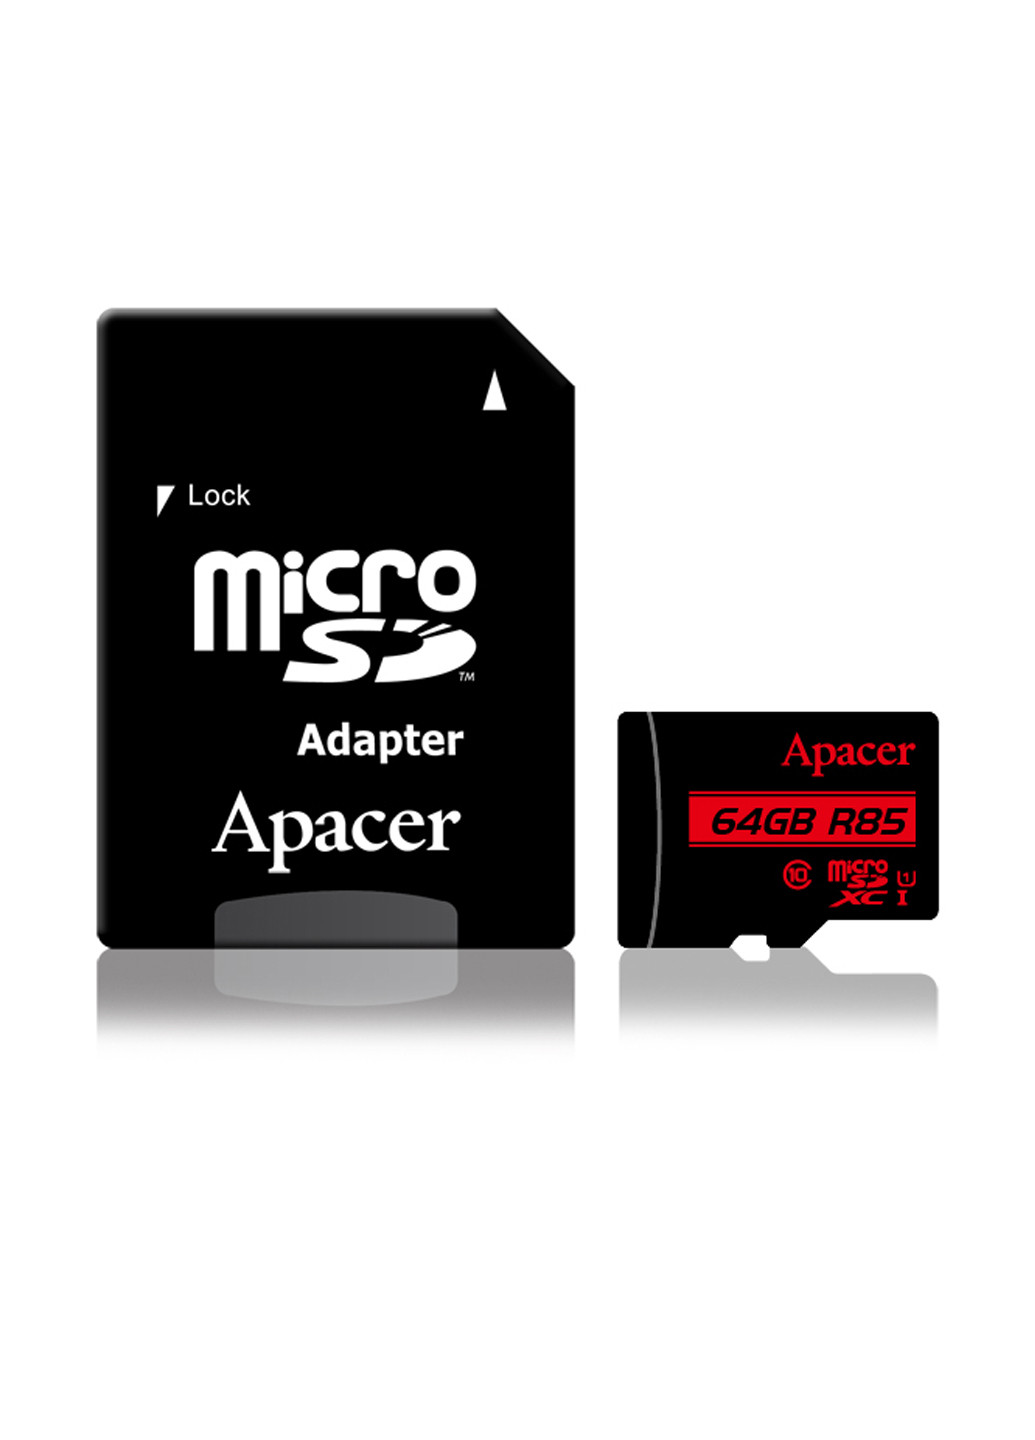 Карта памяти microSDXC 64GB C10 UHS-I (R85MB/s) + SD-adapter (AP64GMCSX10U5-R) Apacer карта памяти apacer microsdxc 64gb c10 uhs-i (r85mb/s) + sd-adapter (ap64gmcsx10u5-r) (135316868)